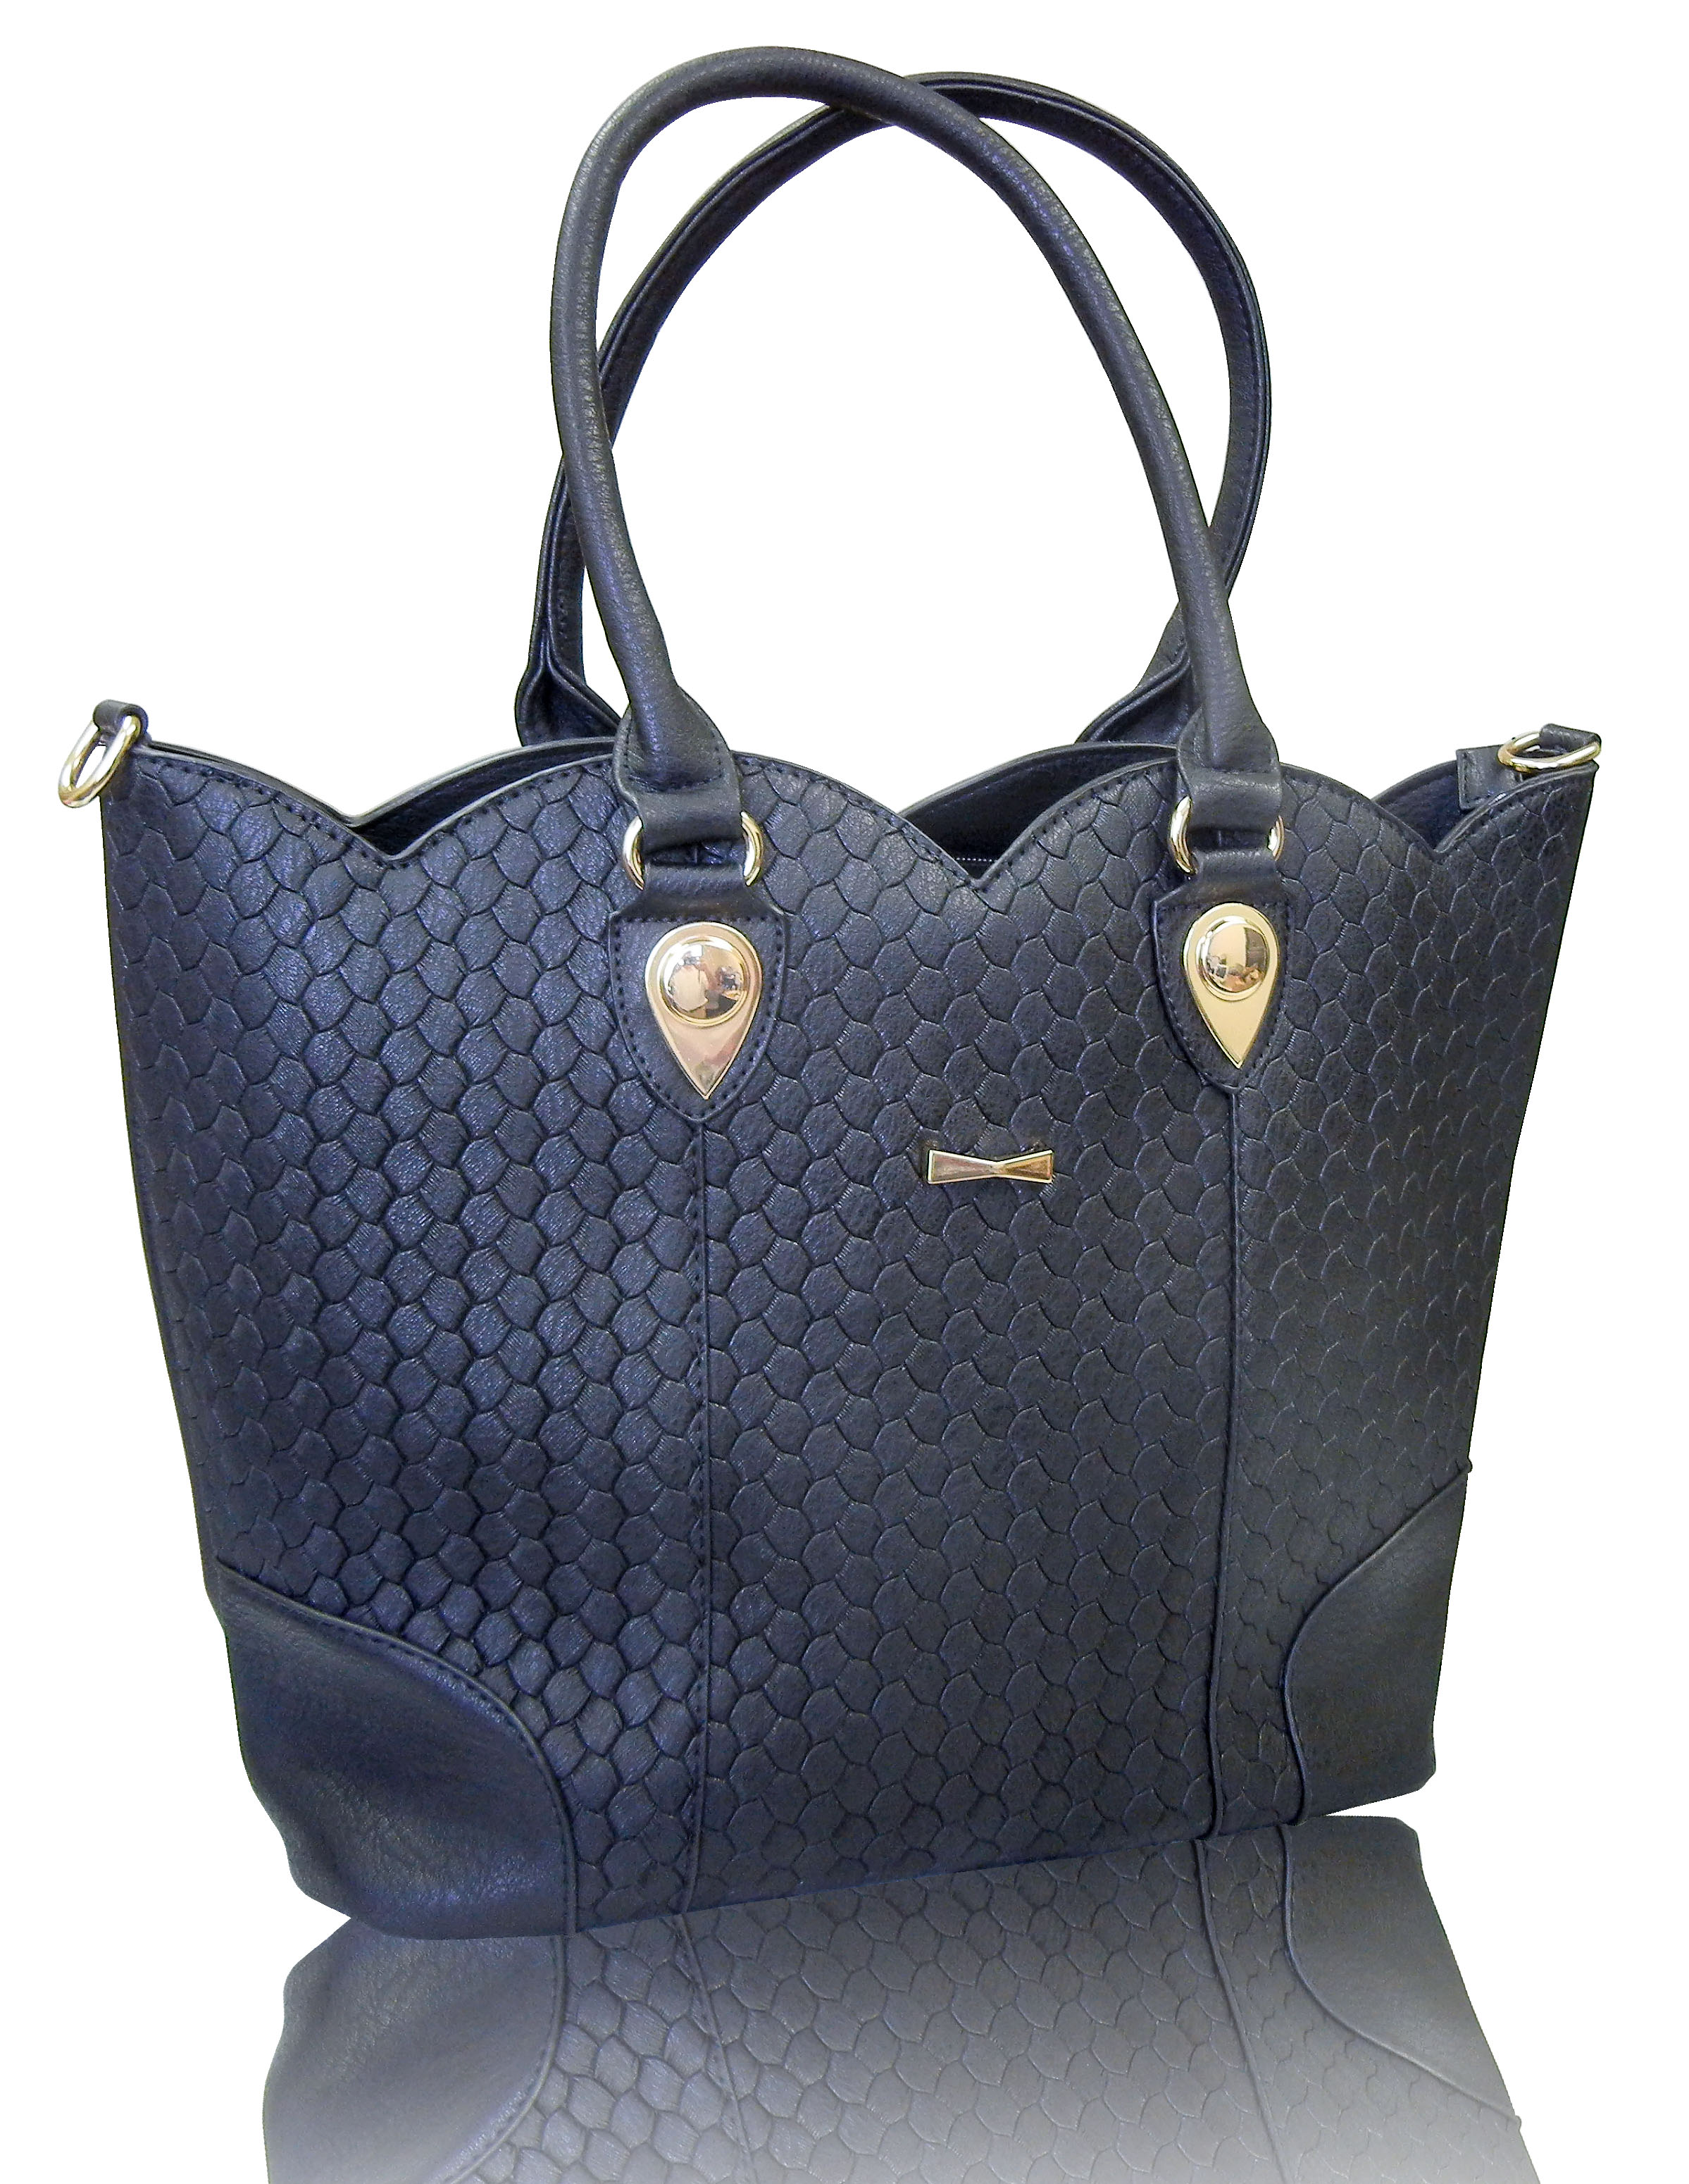 Black color large Handbag with removable straps, satchel bag,with small companion bag,